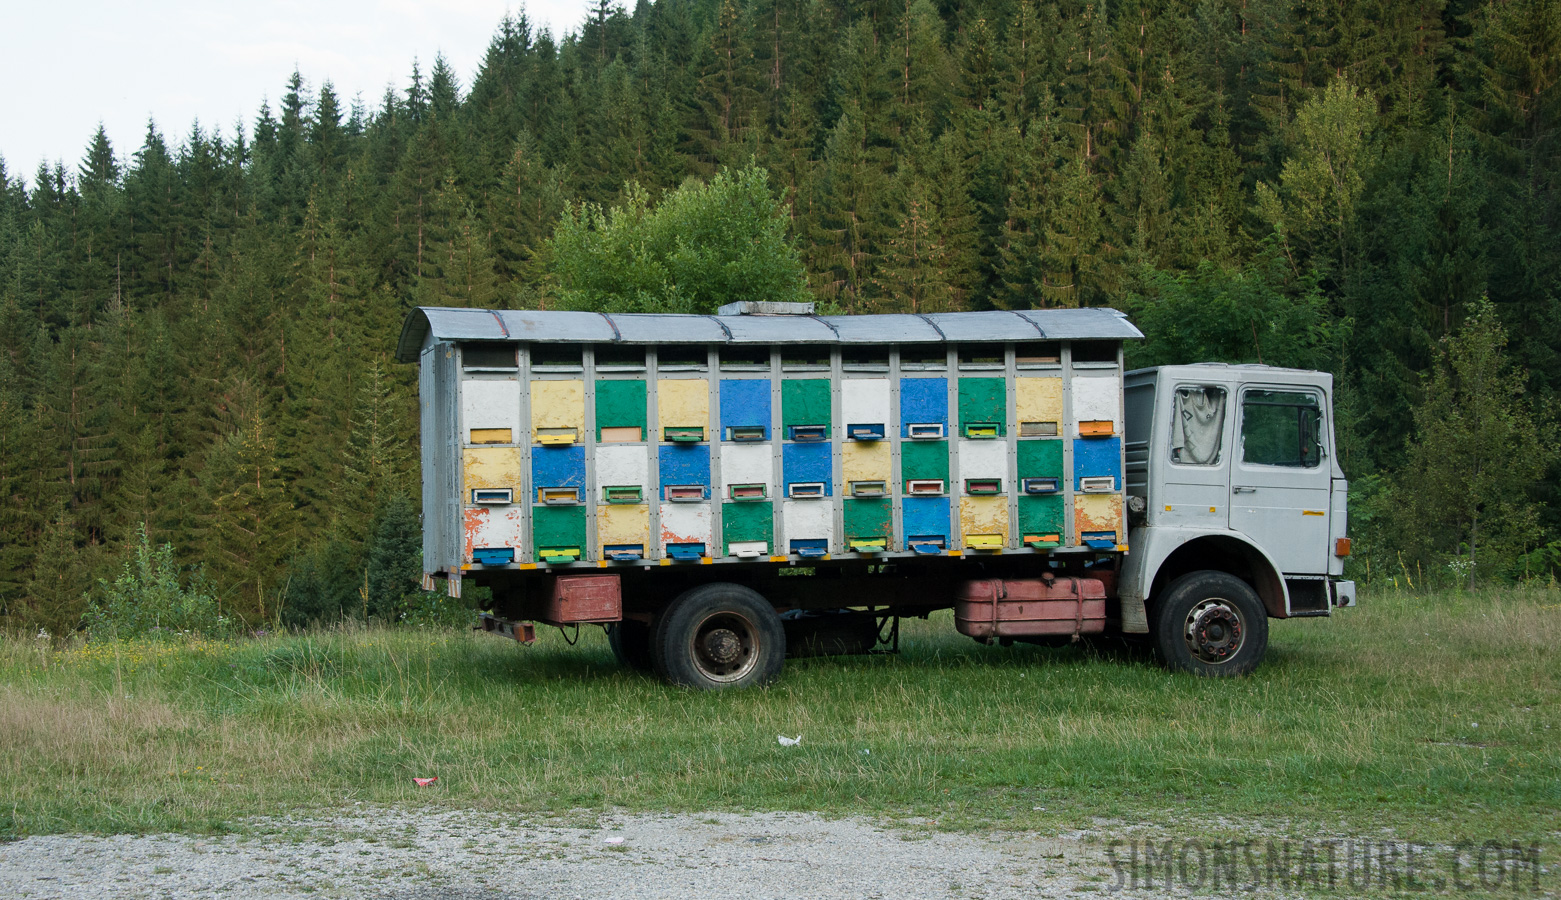 Rumänien - Bienenkästen [50 mm, 1/400 Sek. bei f / 9.0, ISO 1600]